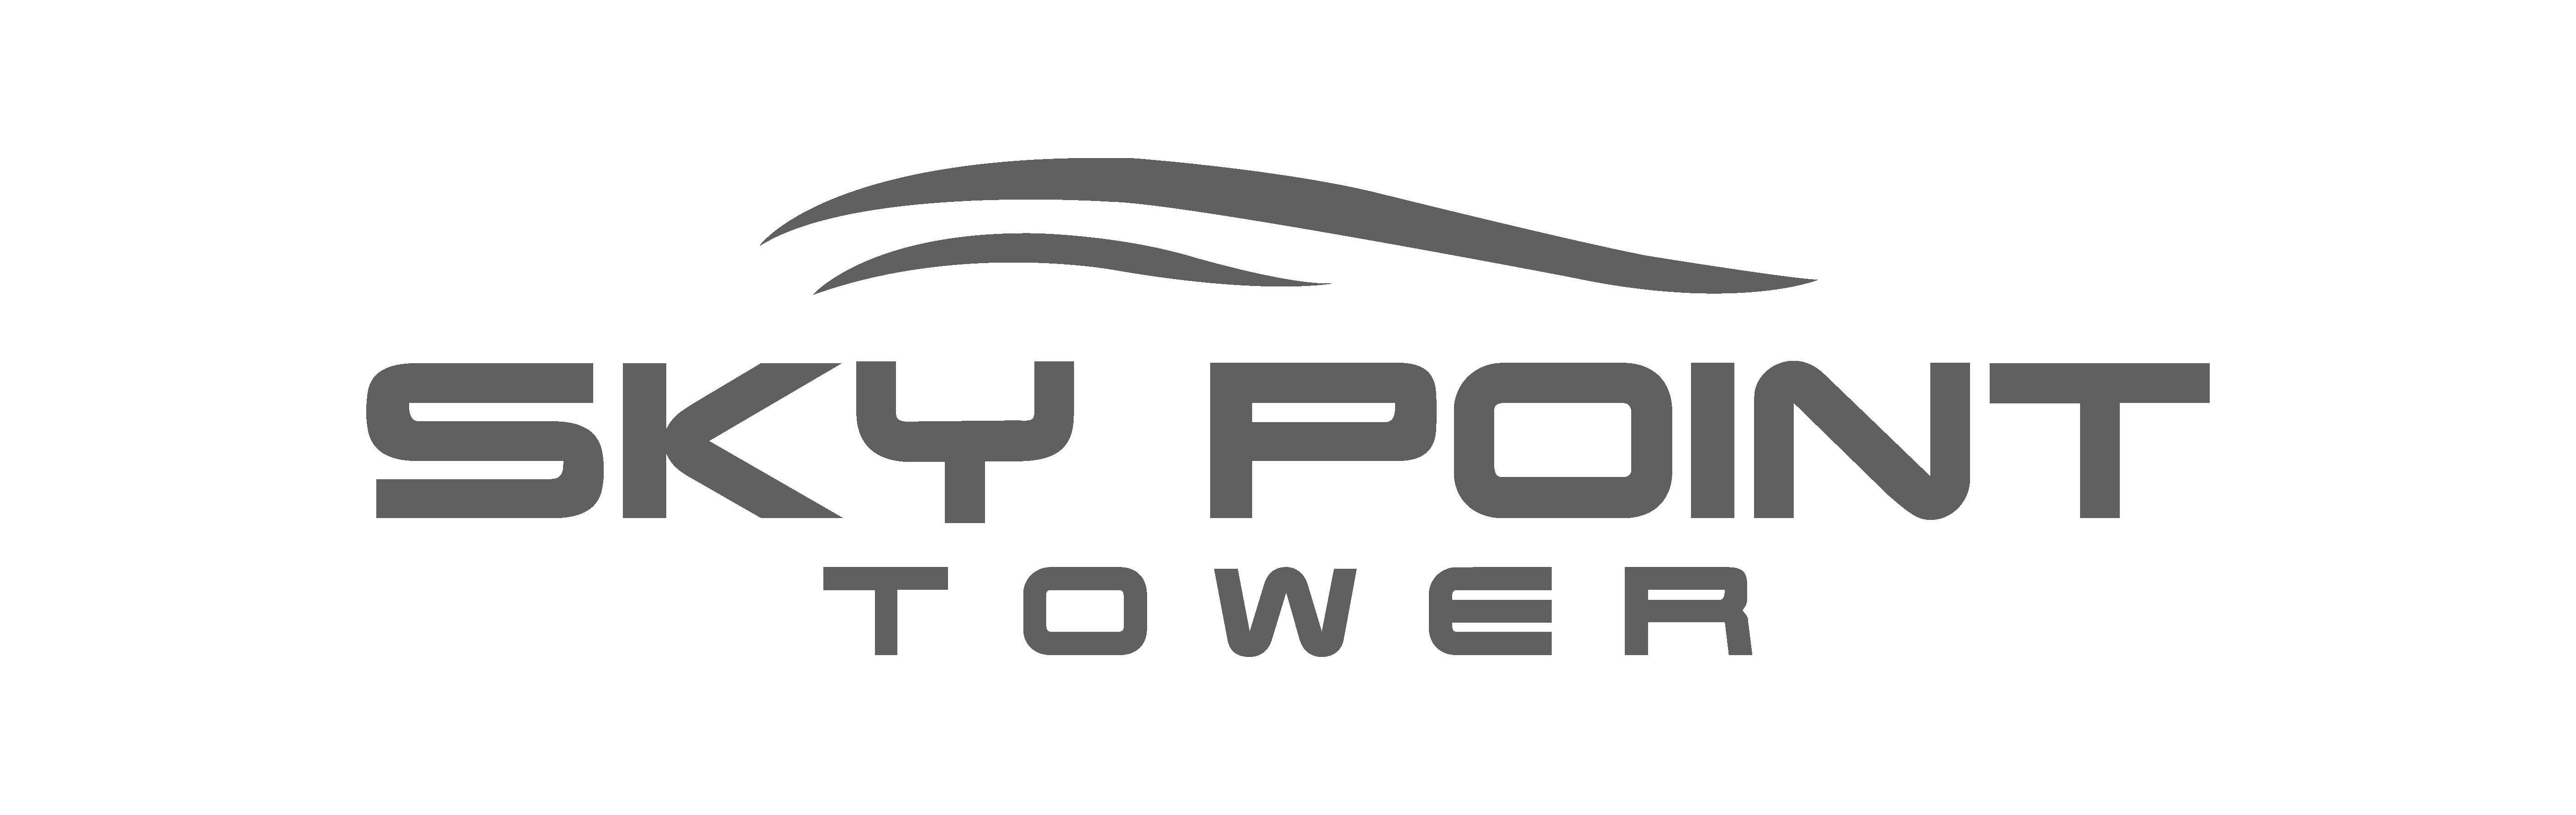 skypoint-logo